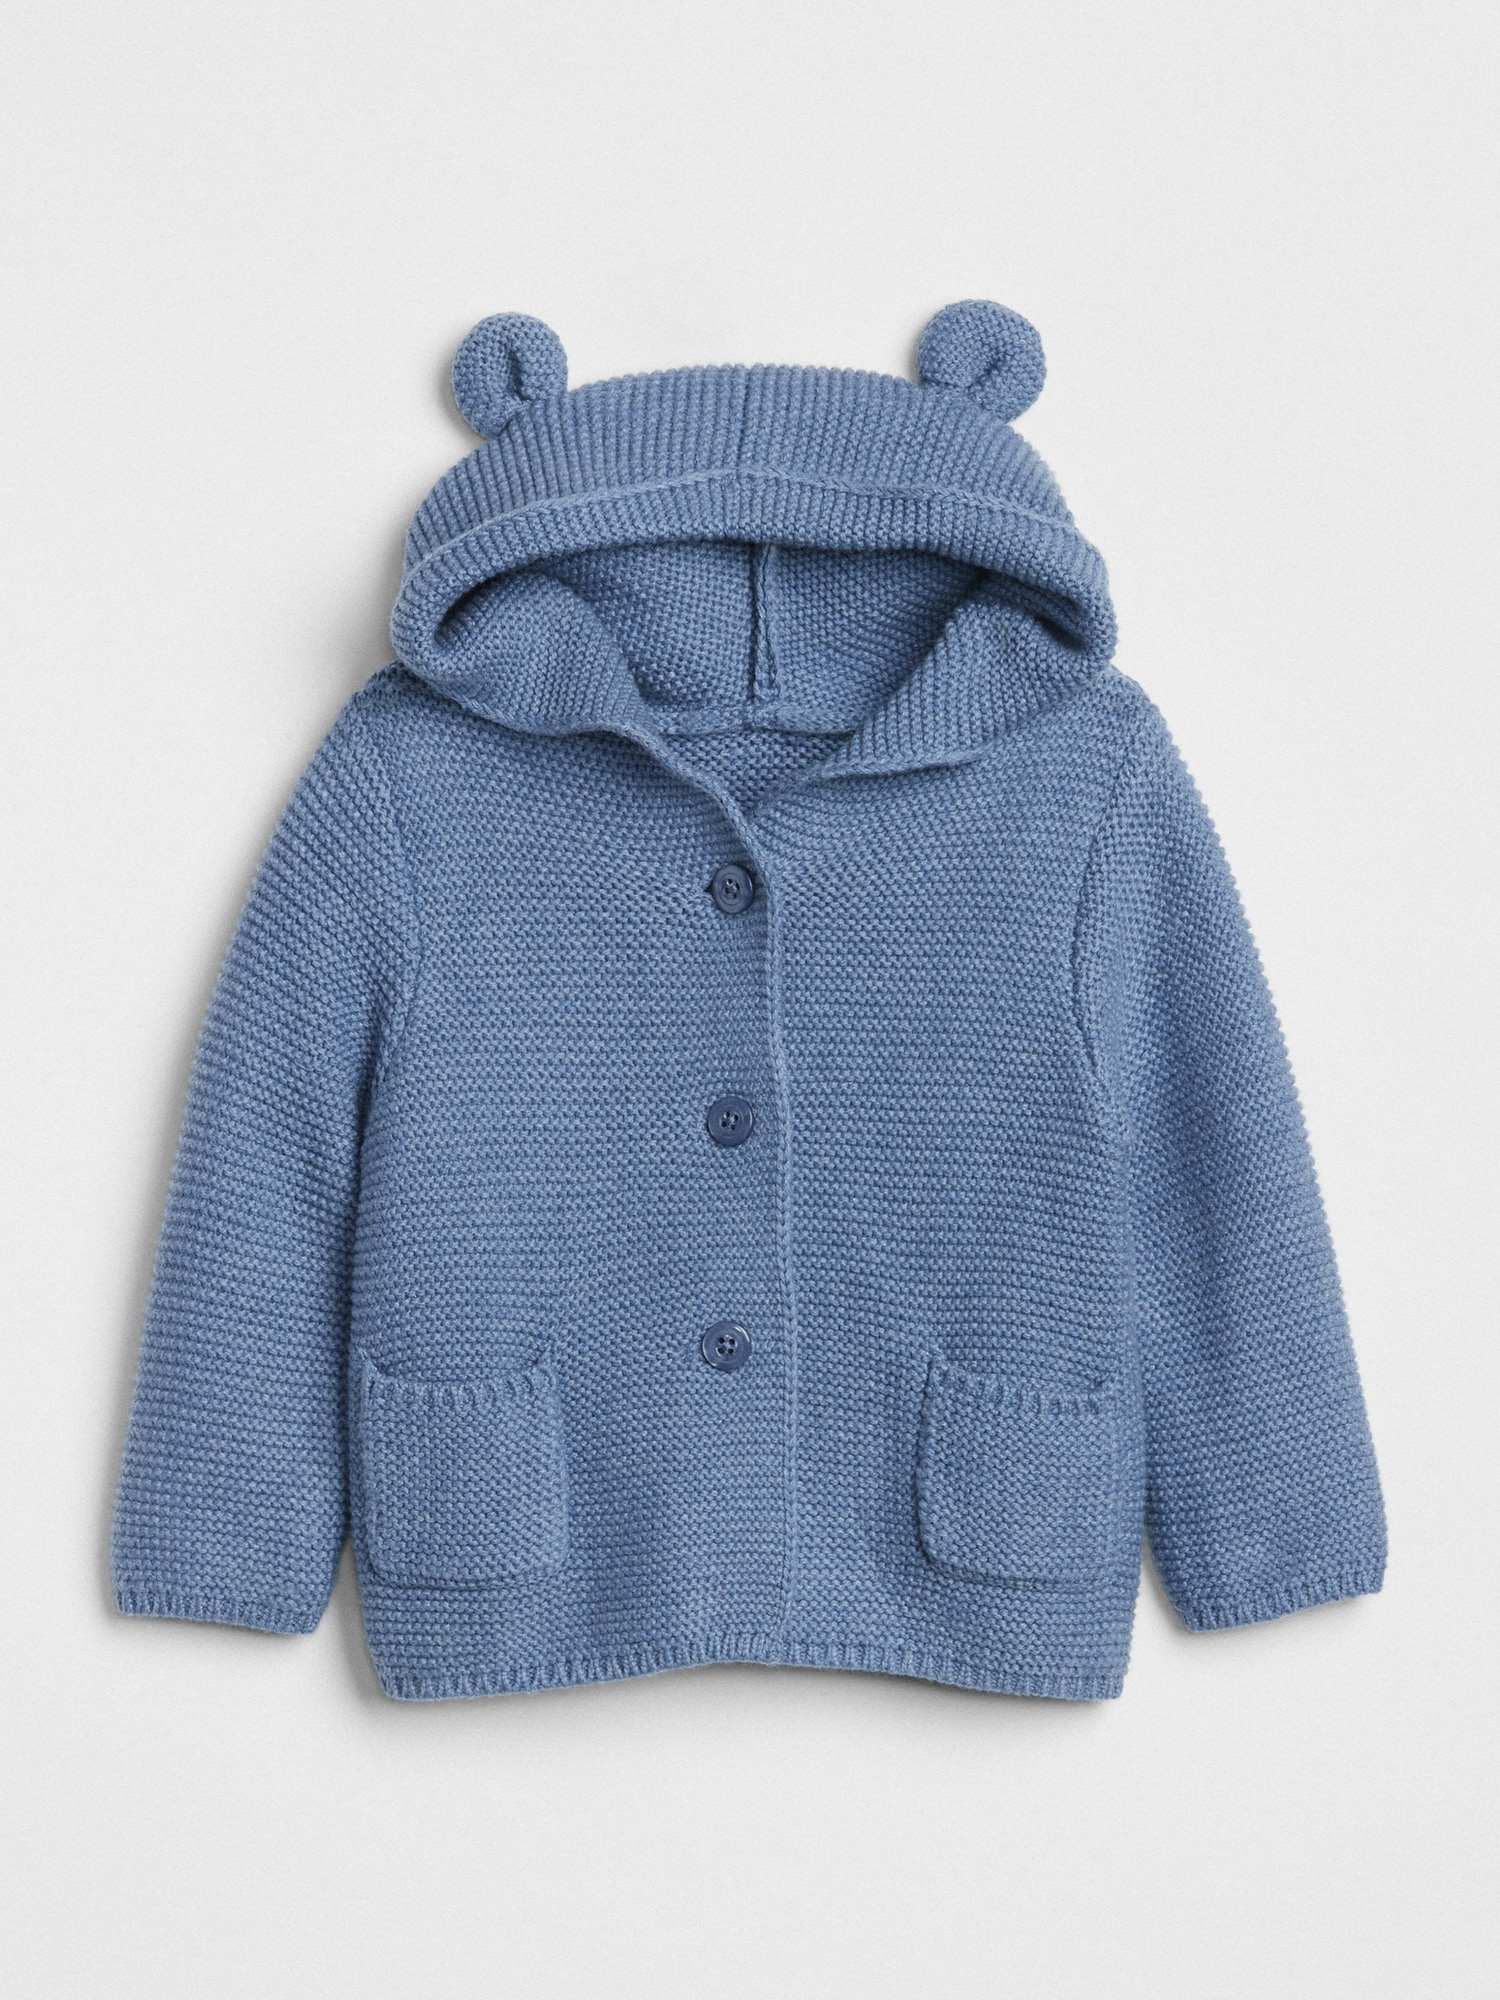 Baby Brannan Bear Sweater | Gap